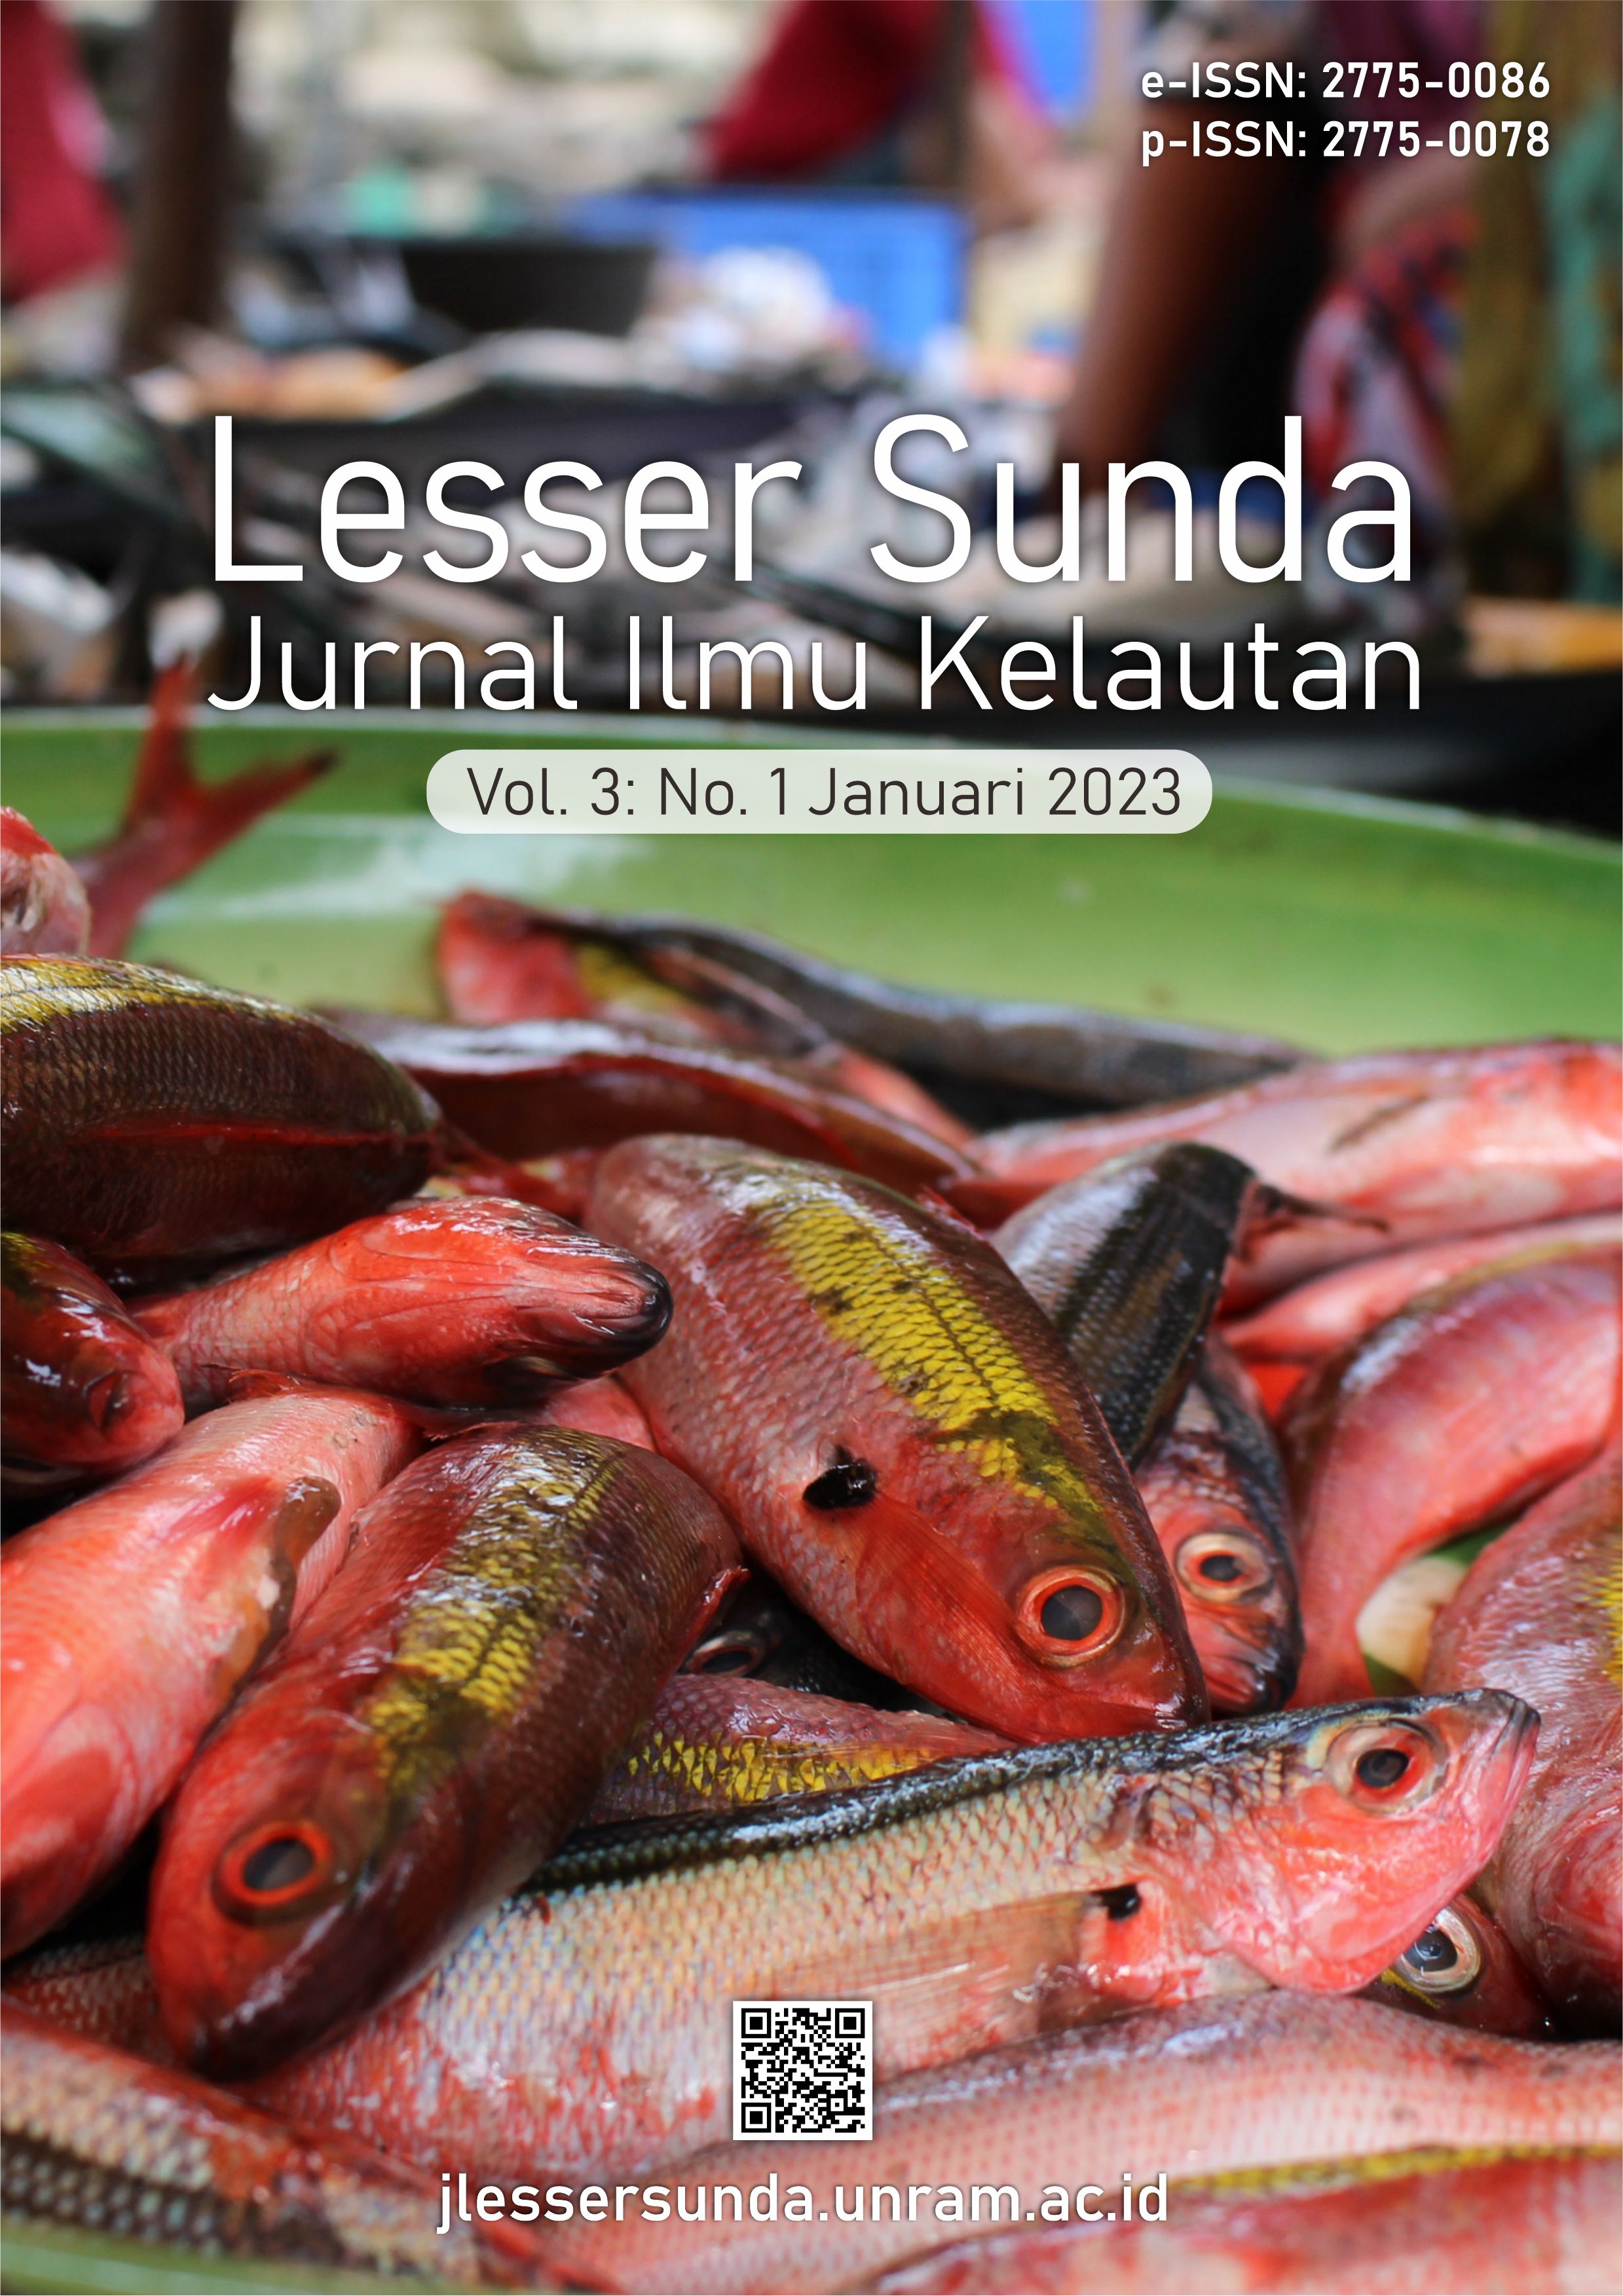 					View Vol. 3 No. 1 (2023): Jurnal Ilmu Kelautan - Lesser Sunda
				